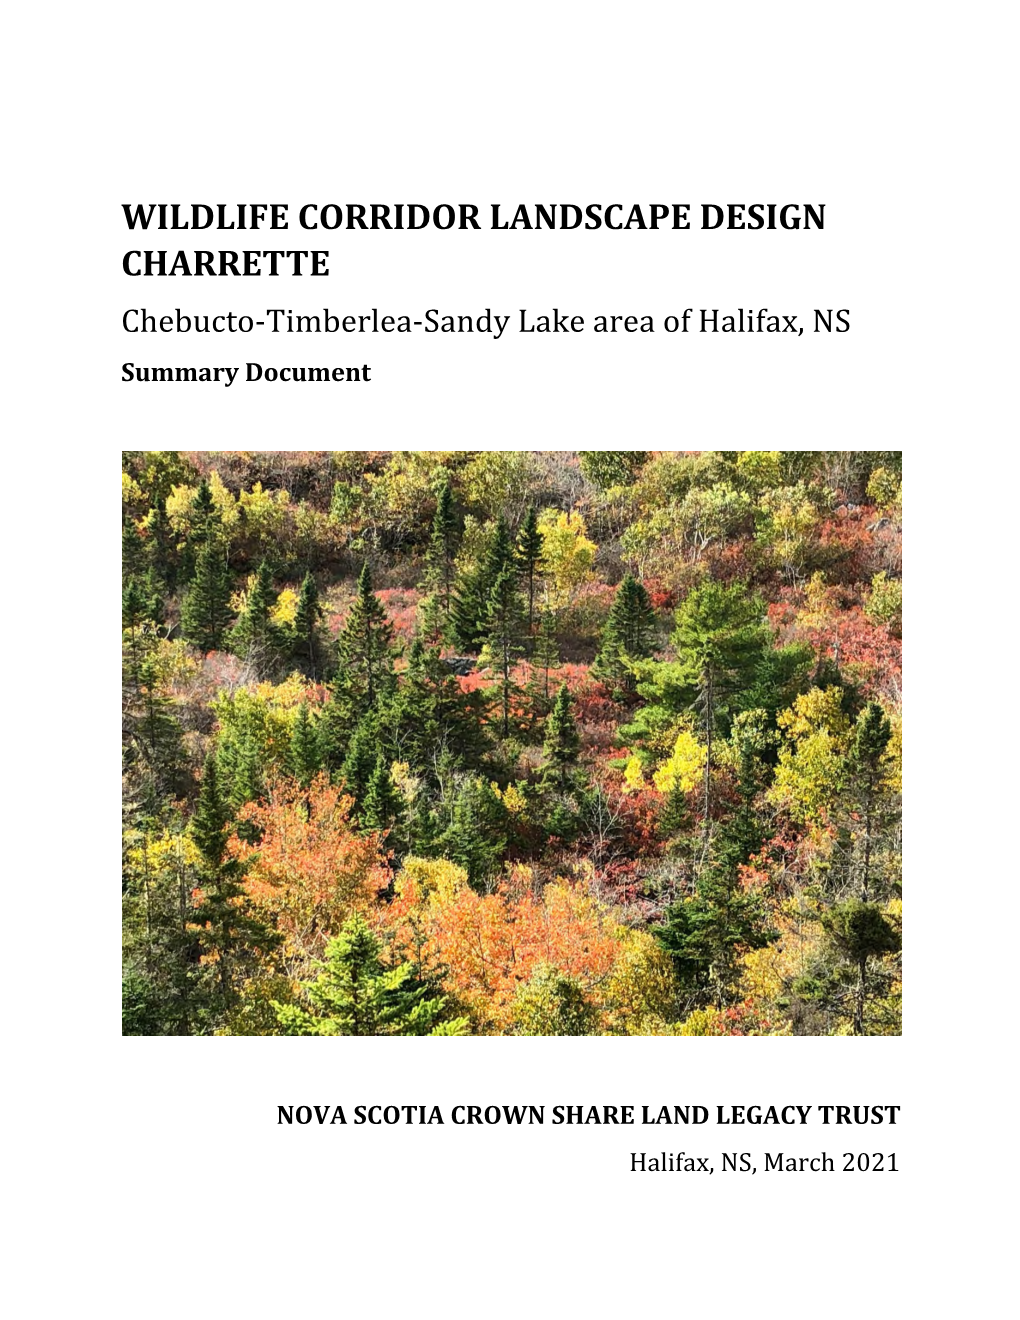 WILDLIFE CORRIDOR LANDSCAPE DESIGN CHARRETTE Chebucto-Timberlea-Sandy Lake Area of Halifax, NS Summary Document